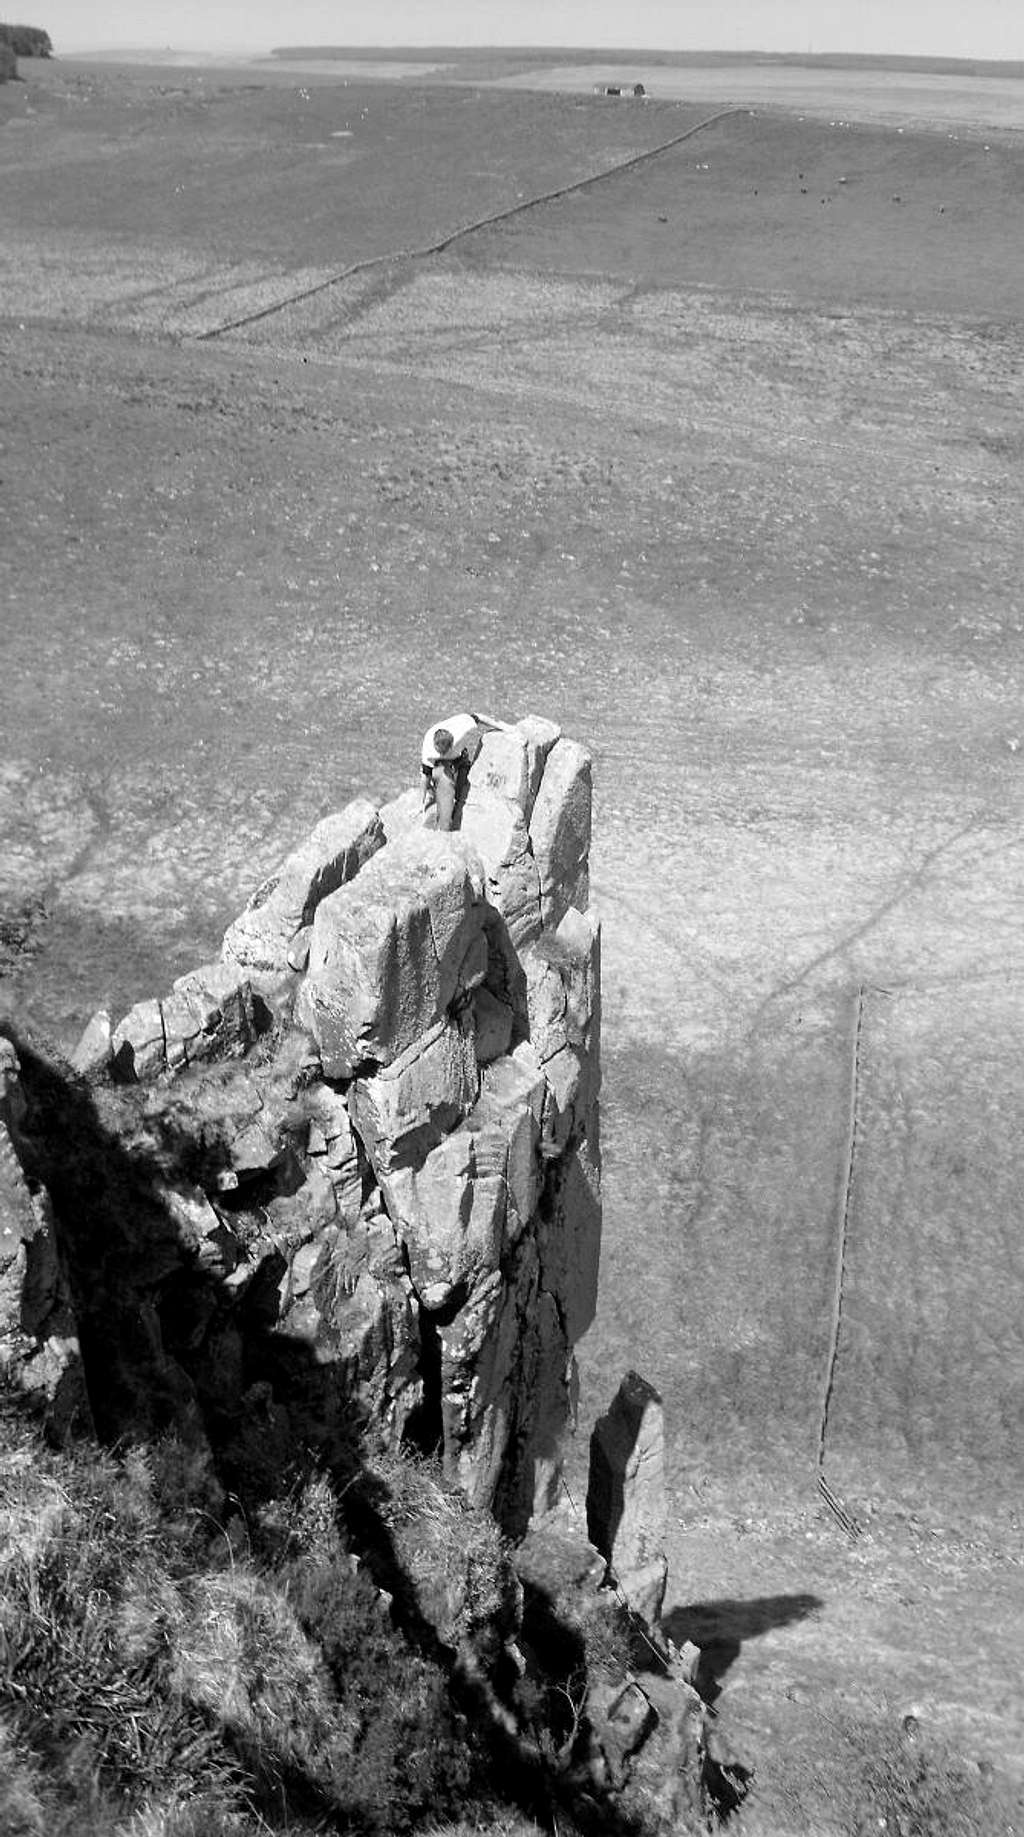 Pinnacle Face Crag Lough